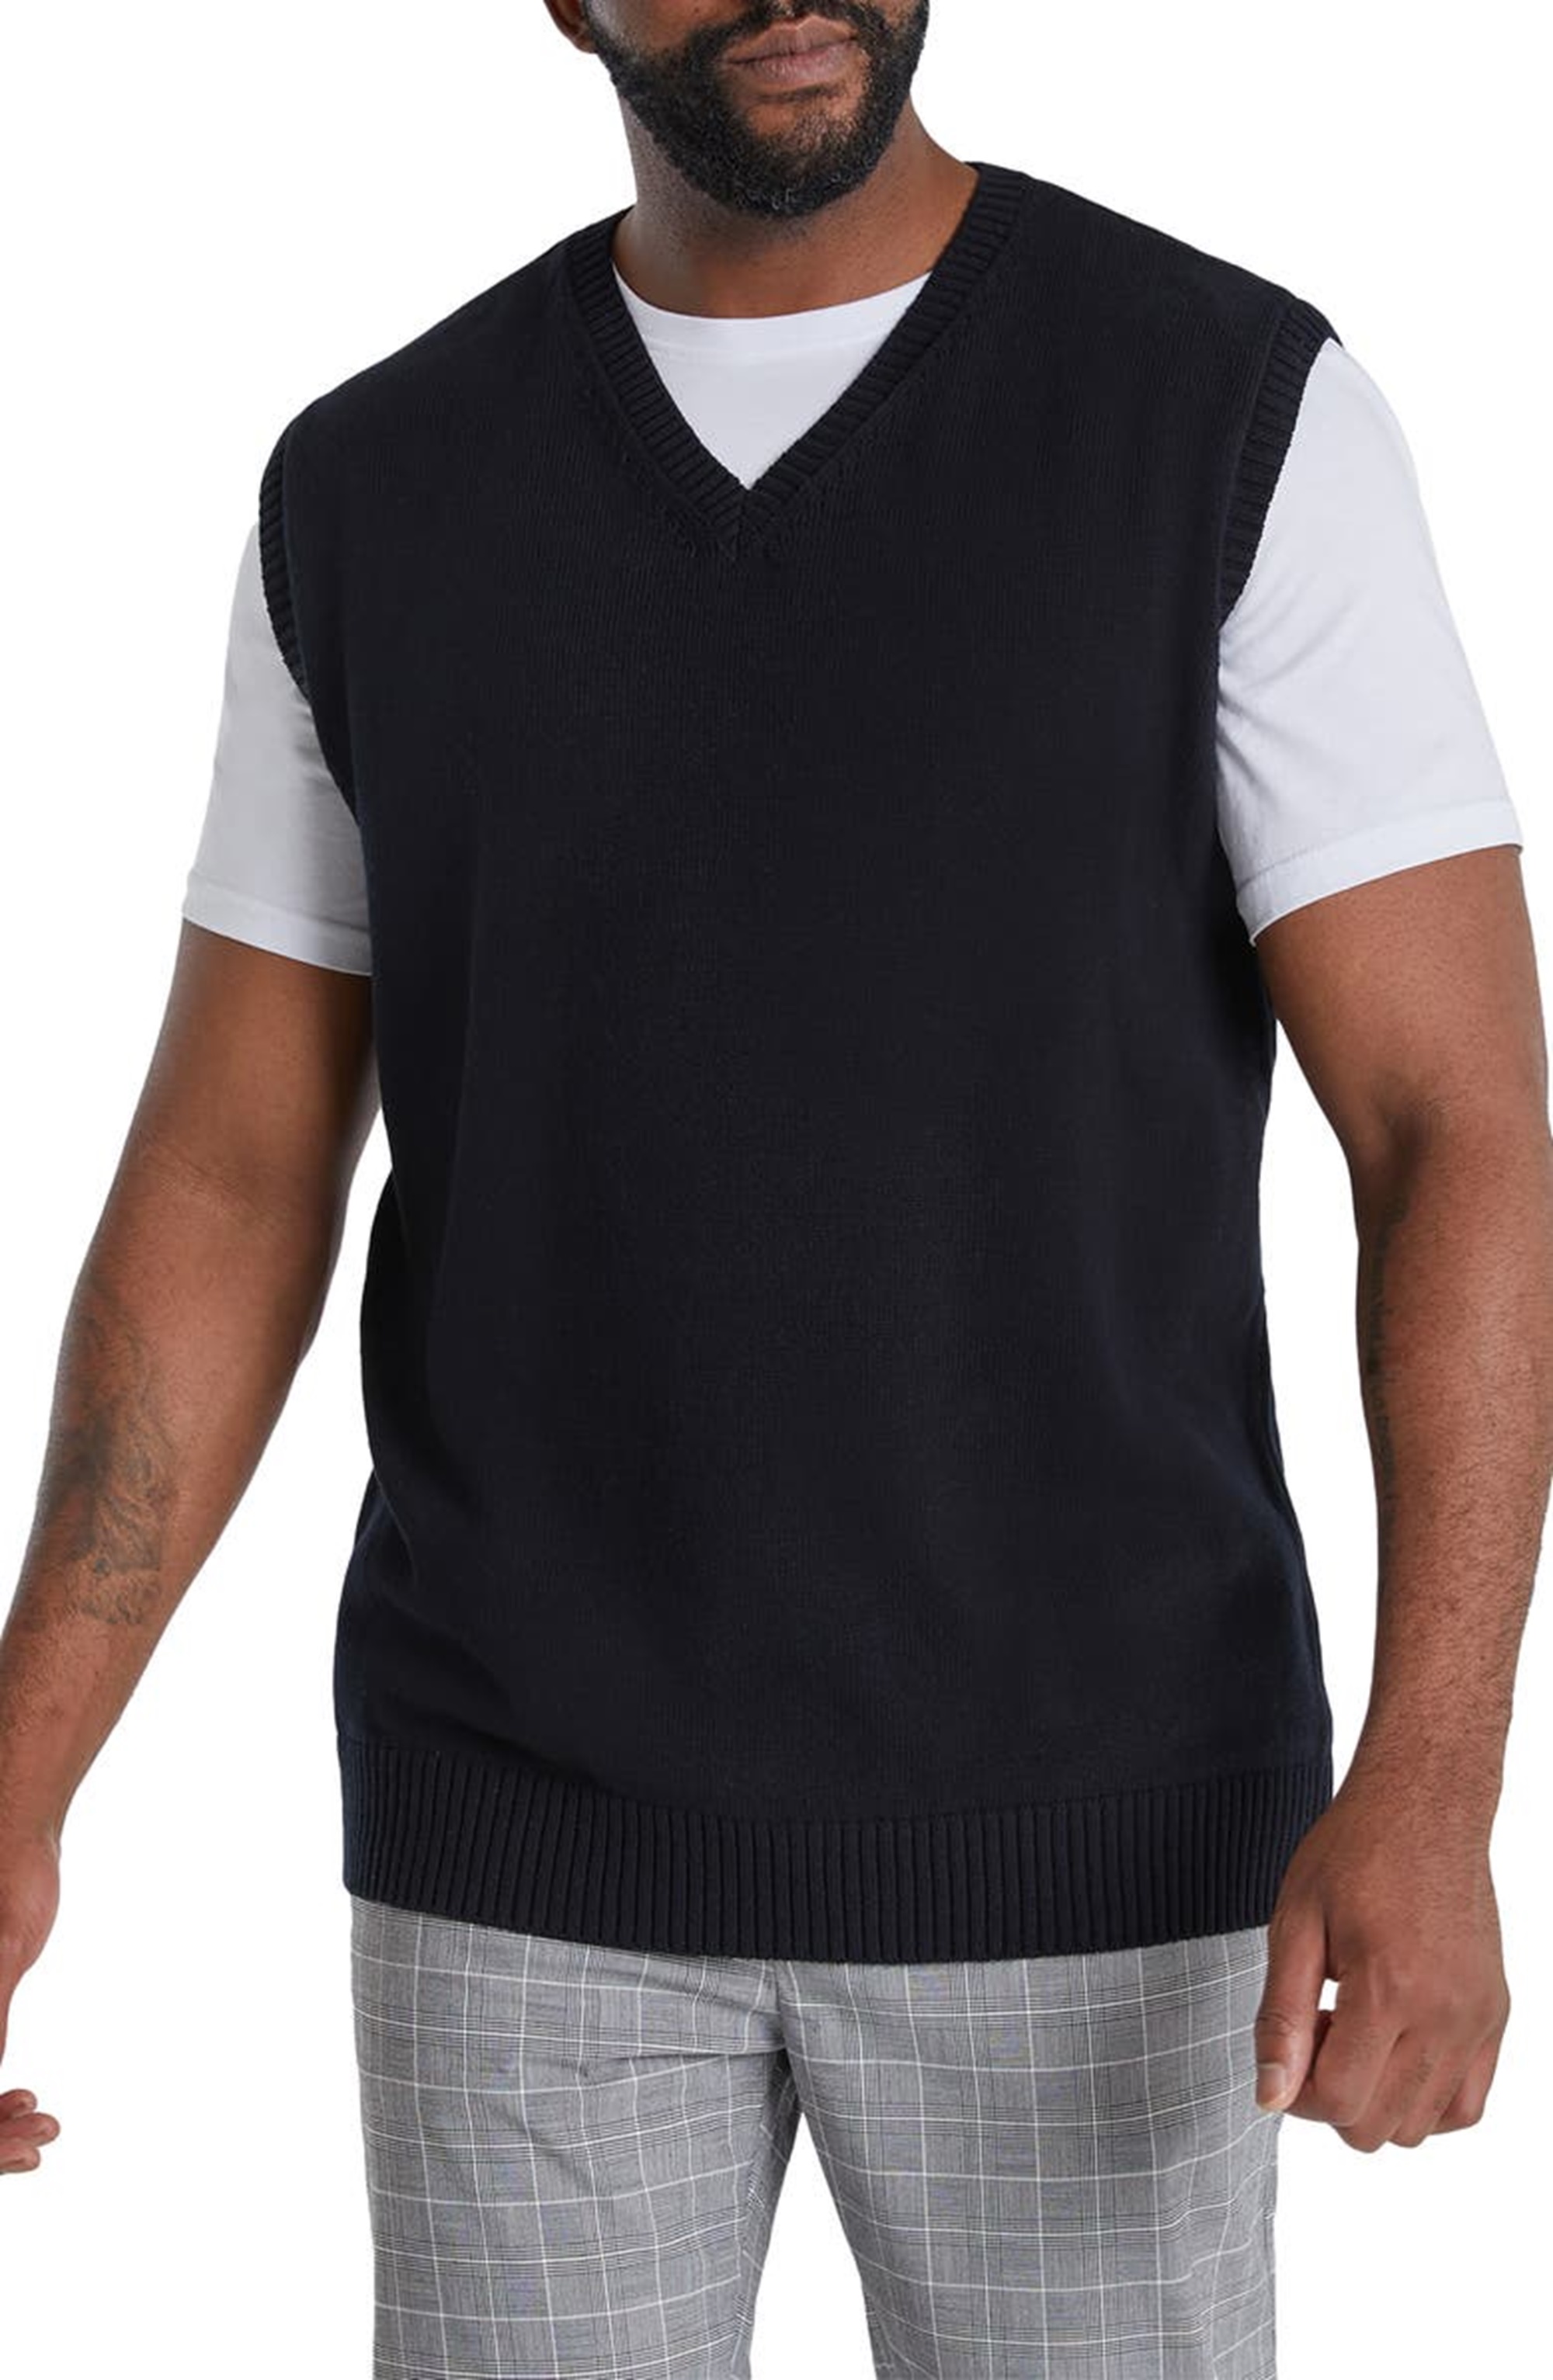 Best sweater vests for men 2023: Cos to Prads